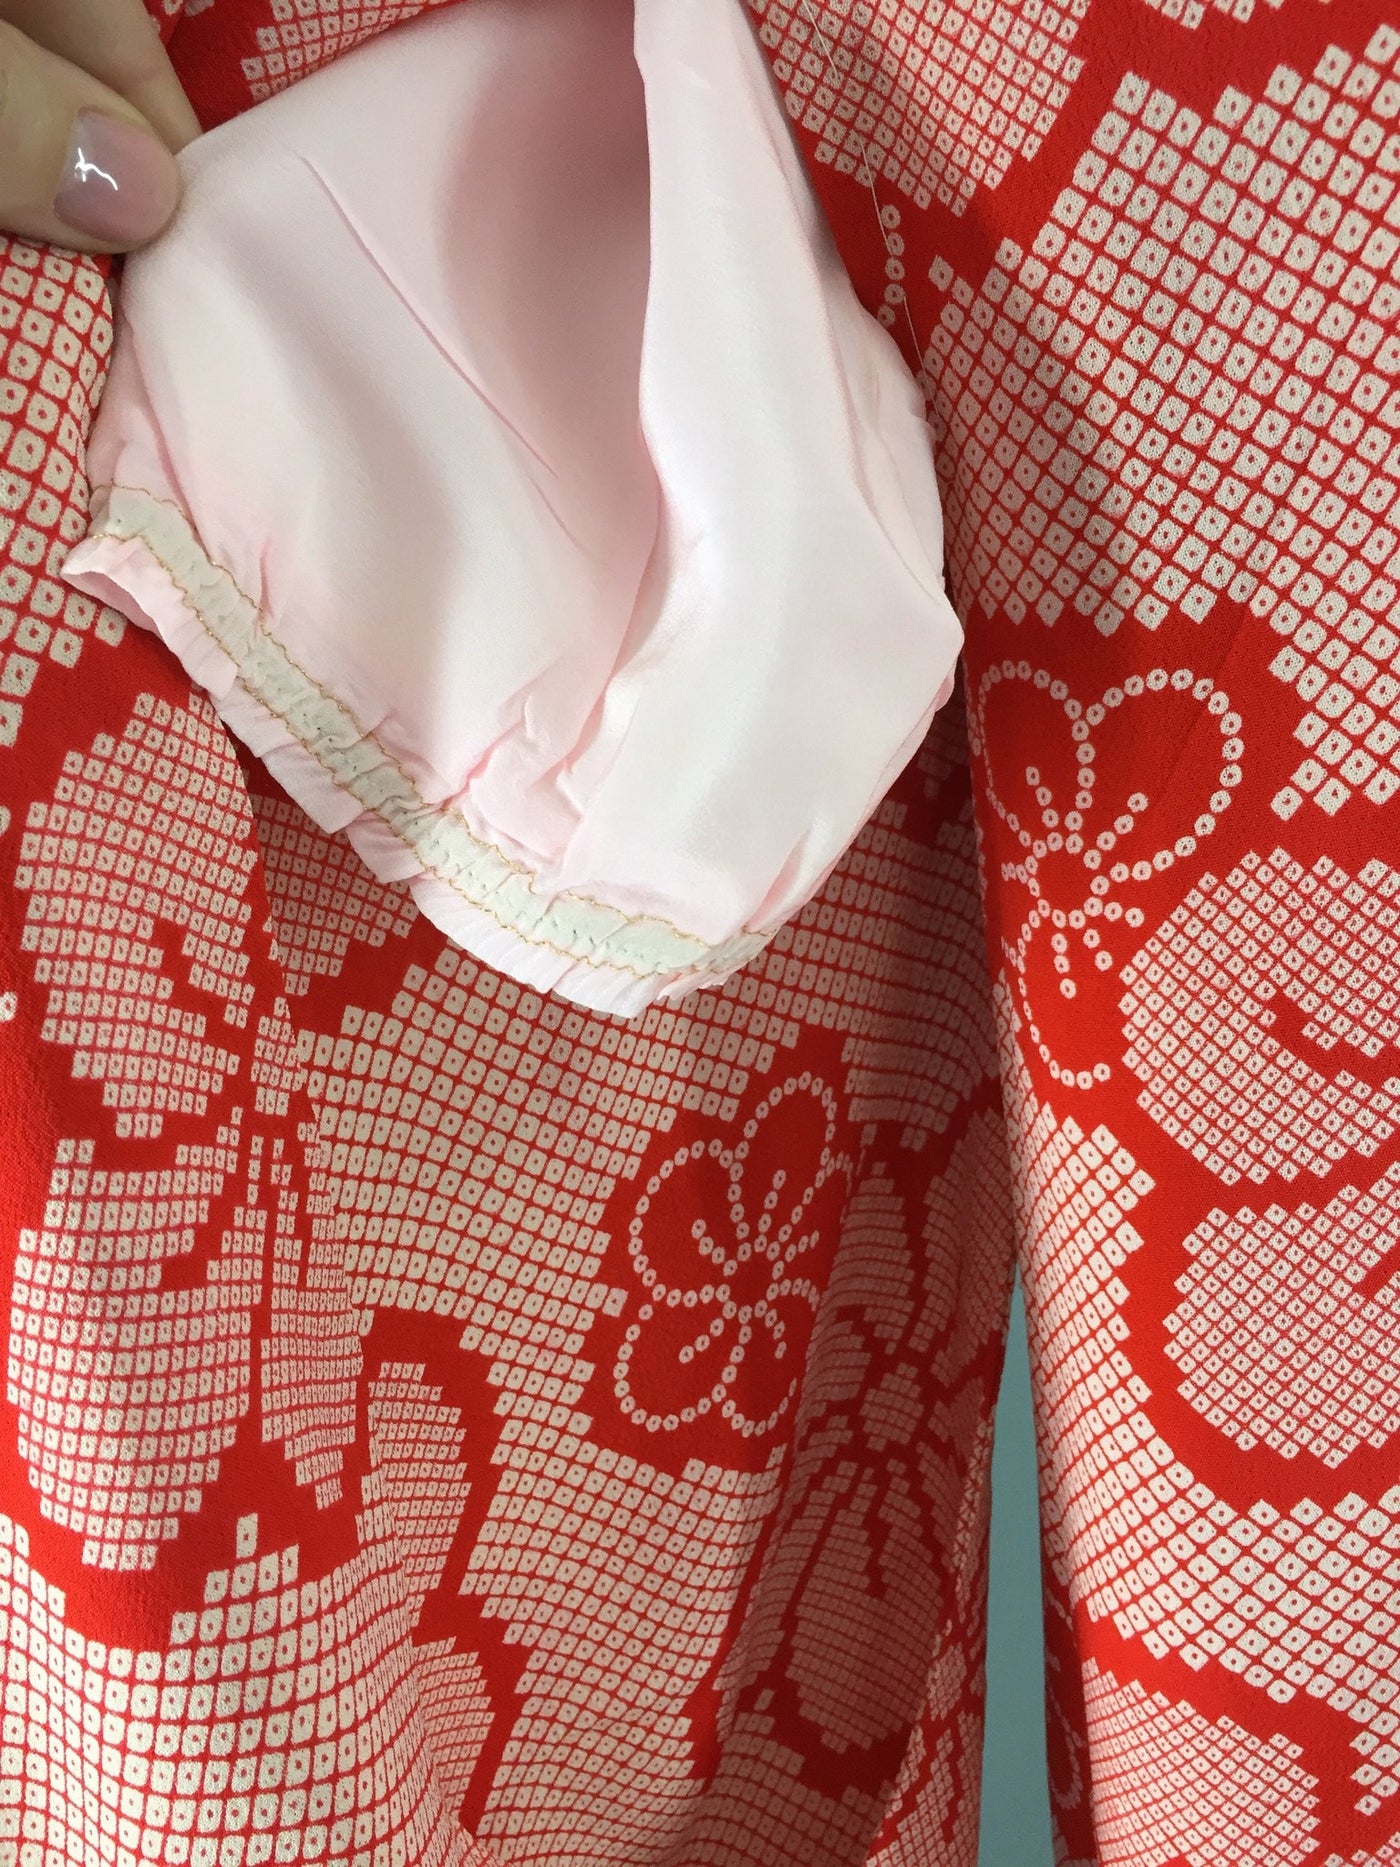 Vintage 1920s Silk Kimono Robe / Red Shibori Daisy Print - ThisBlueBird